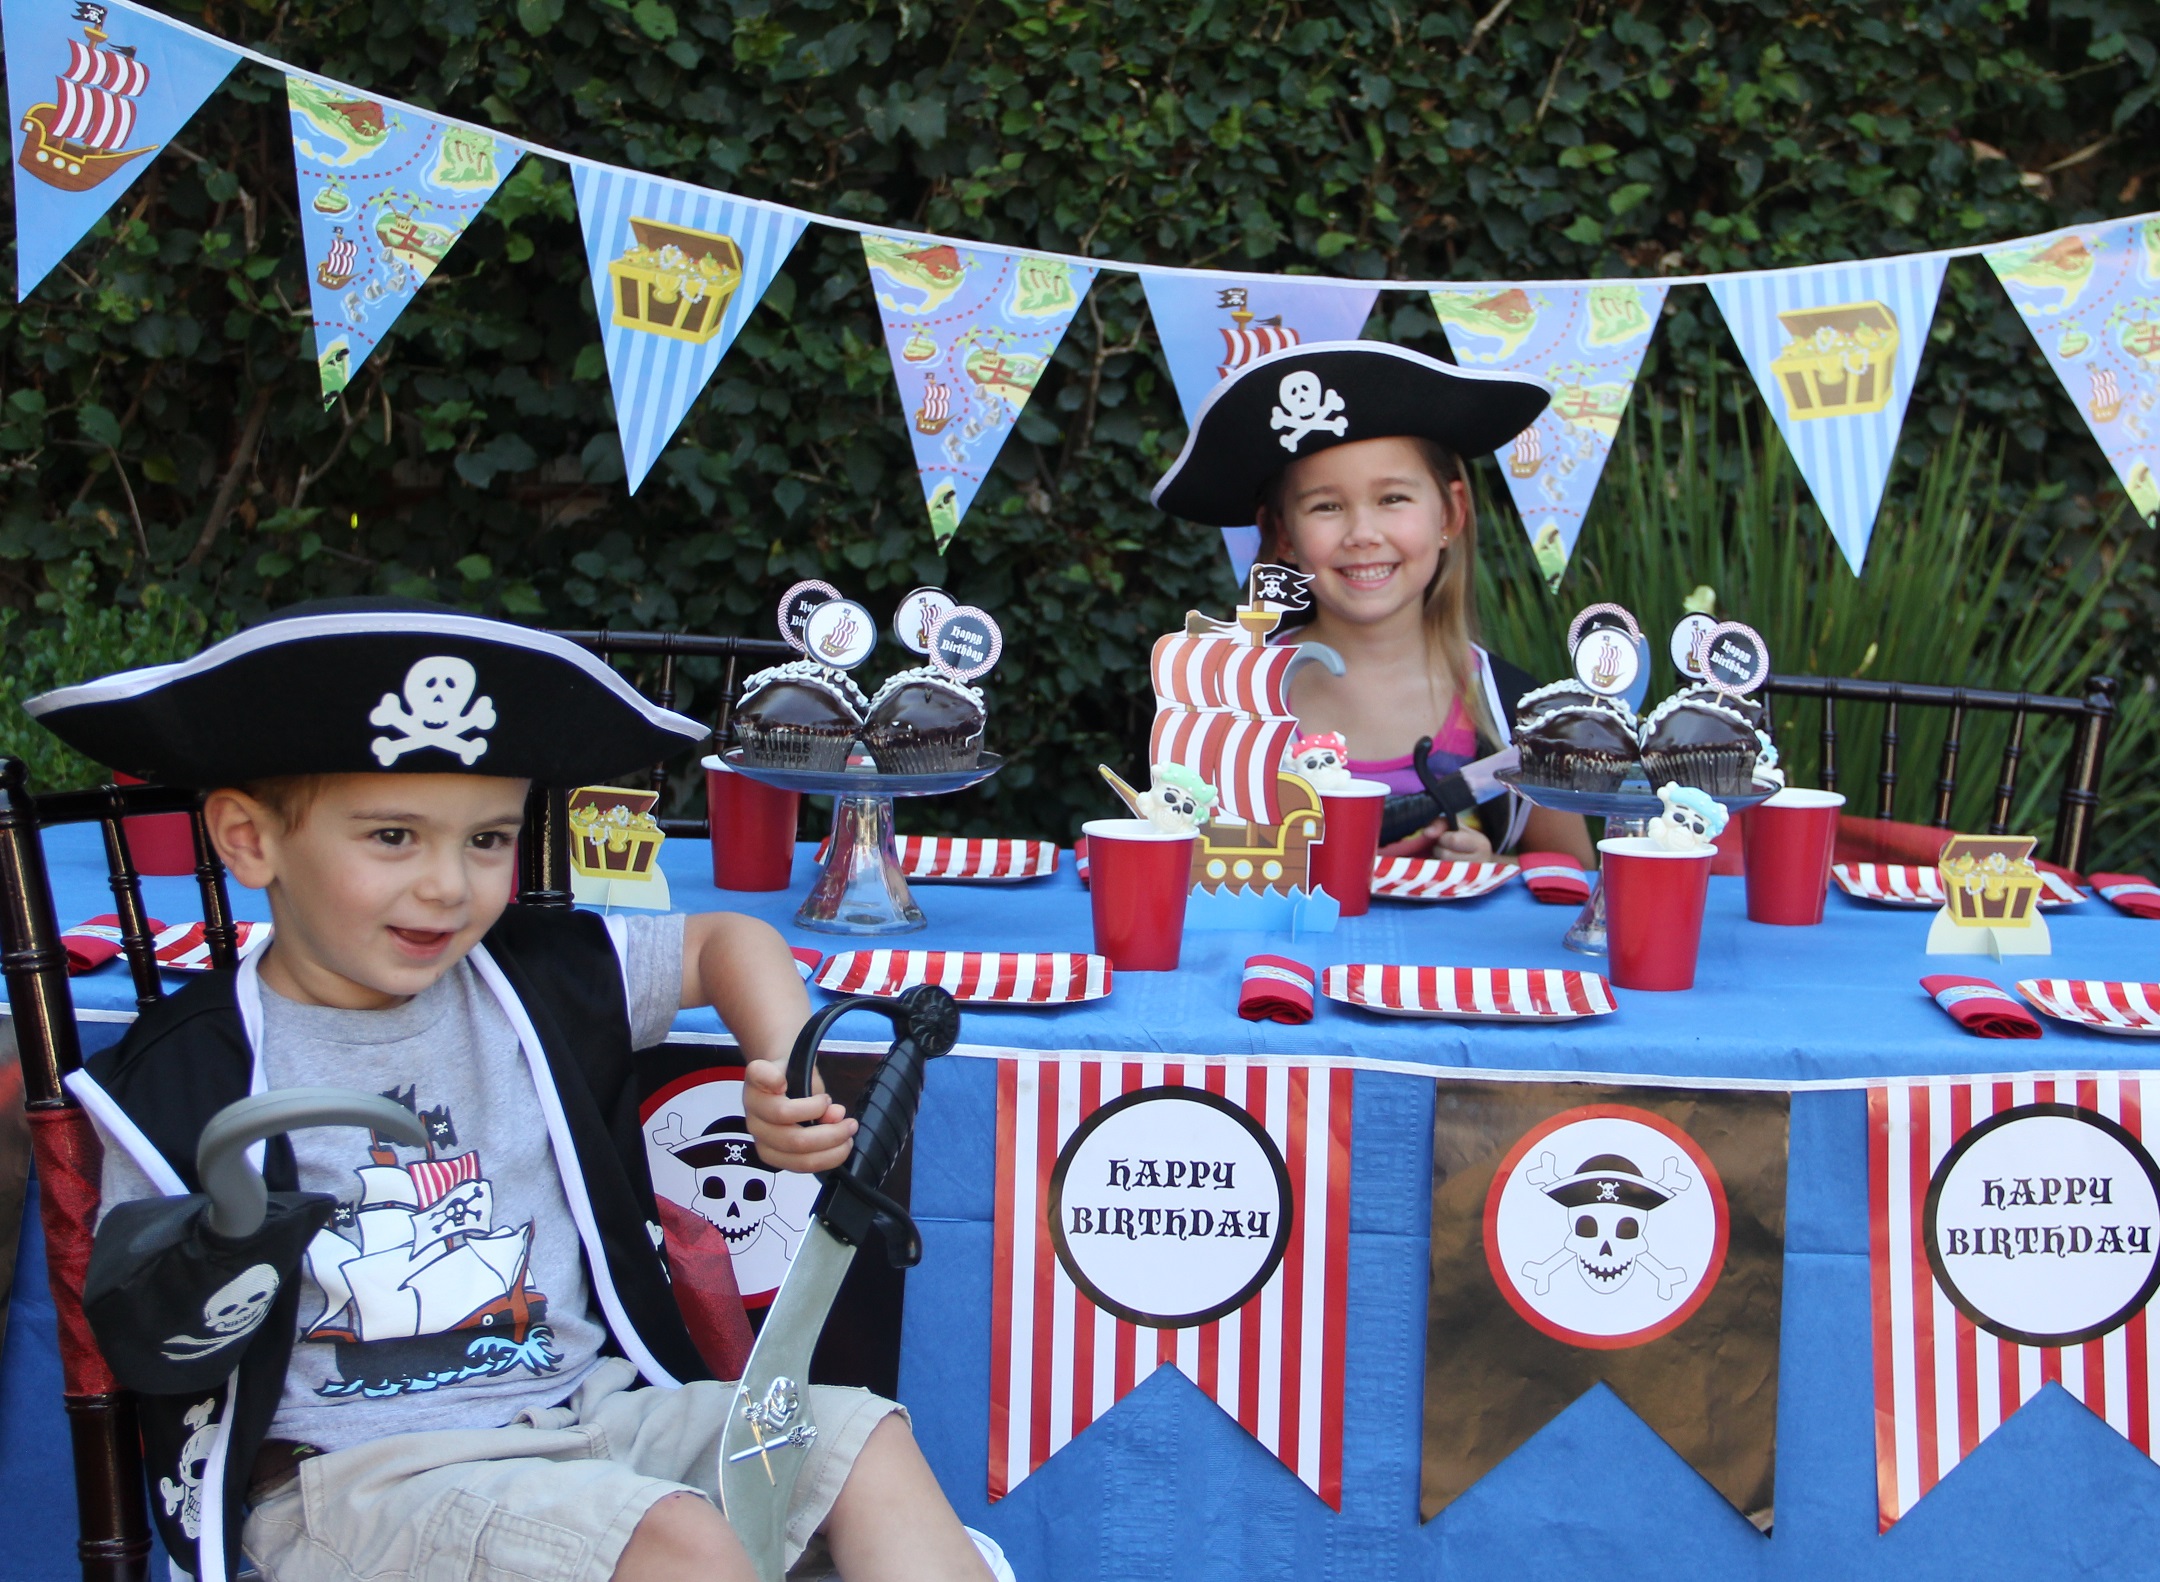 2. Fiesta 'Pirata' para chicos